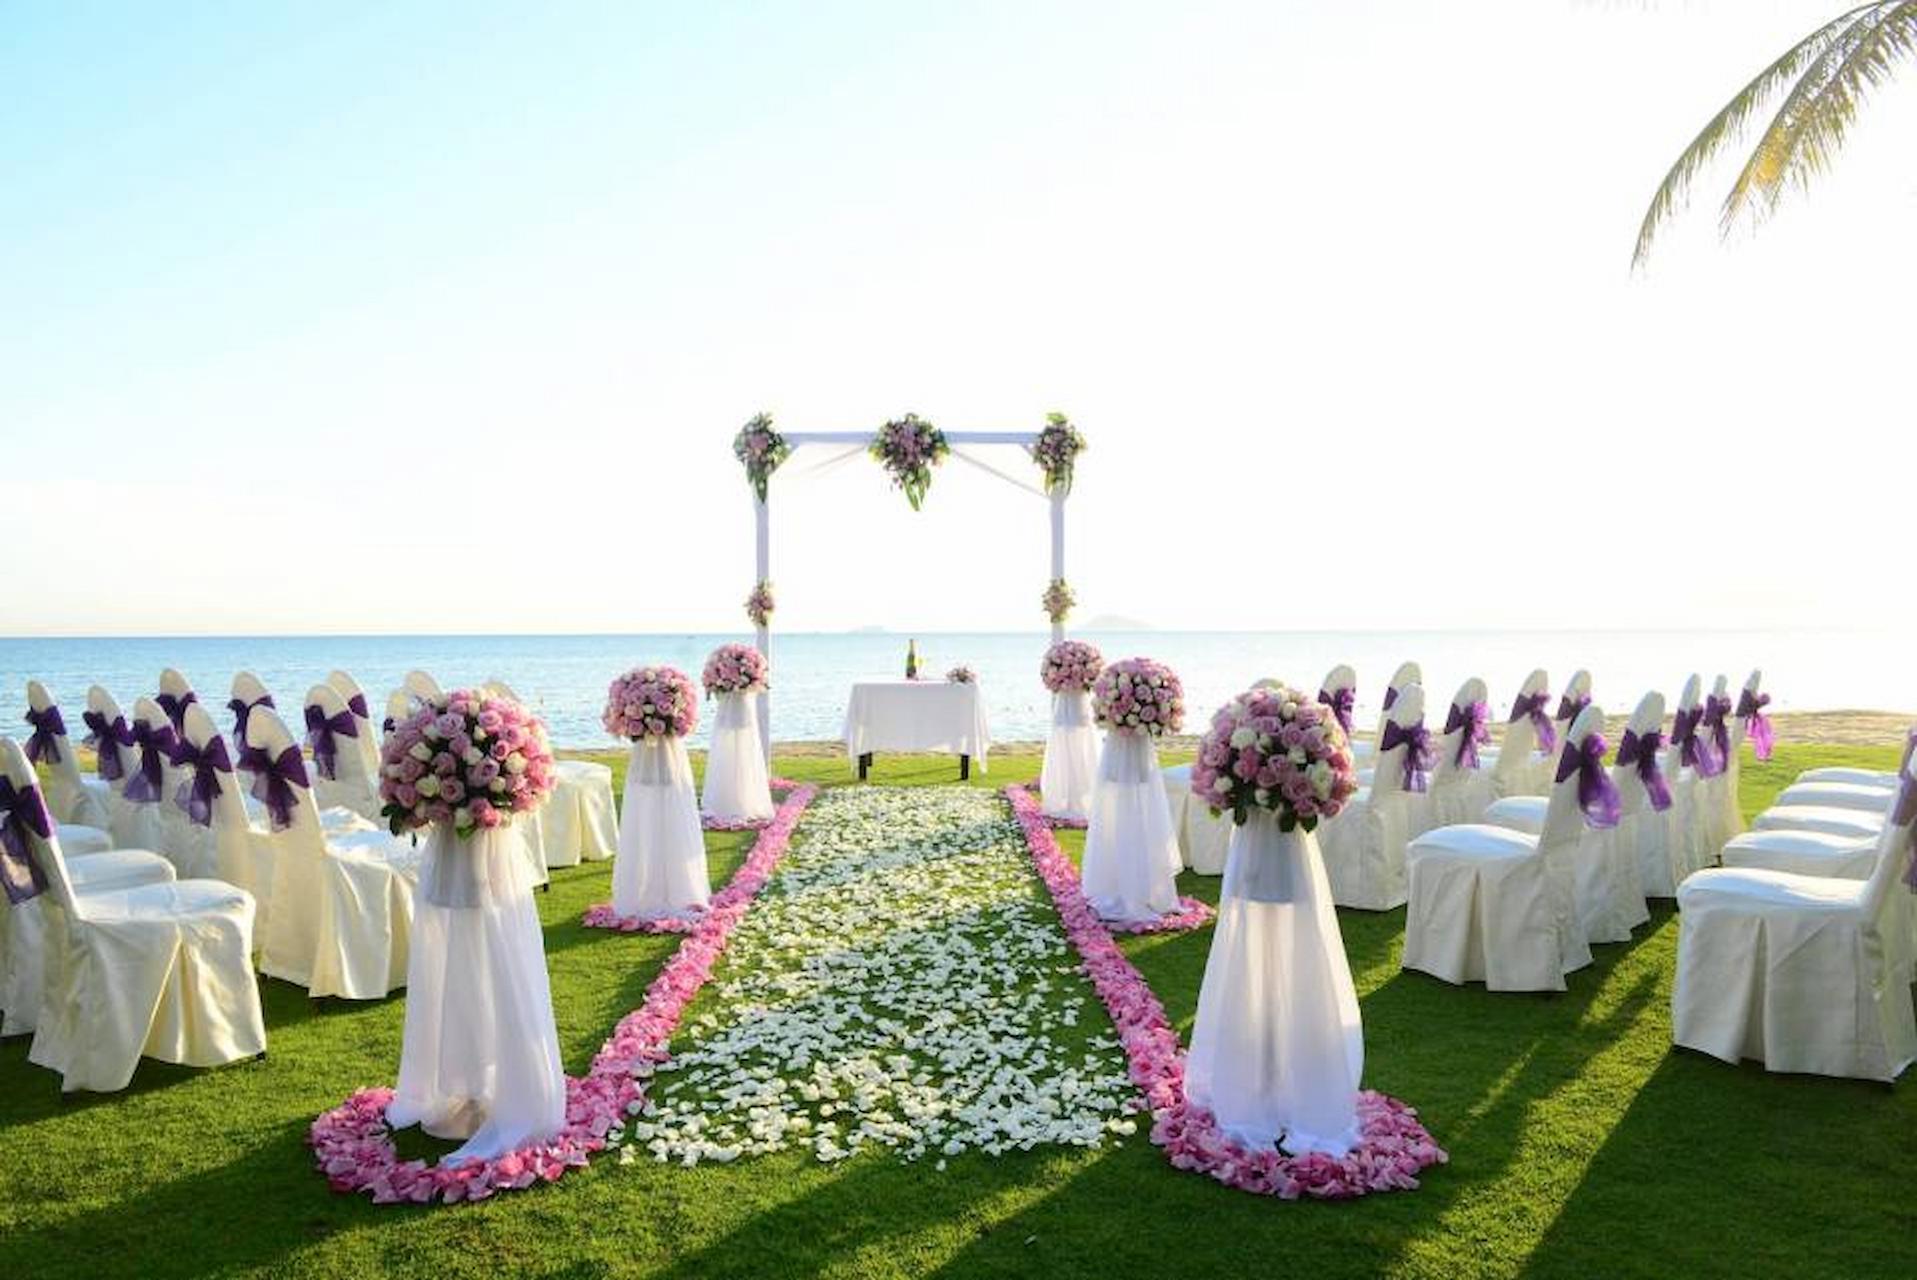 How Can You Make Small Weddings Memorable?